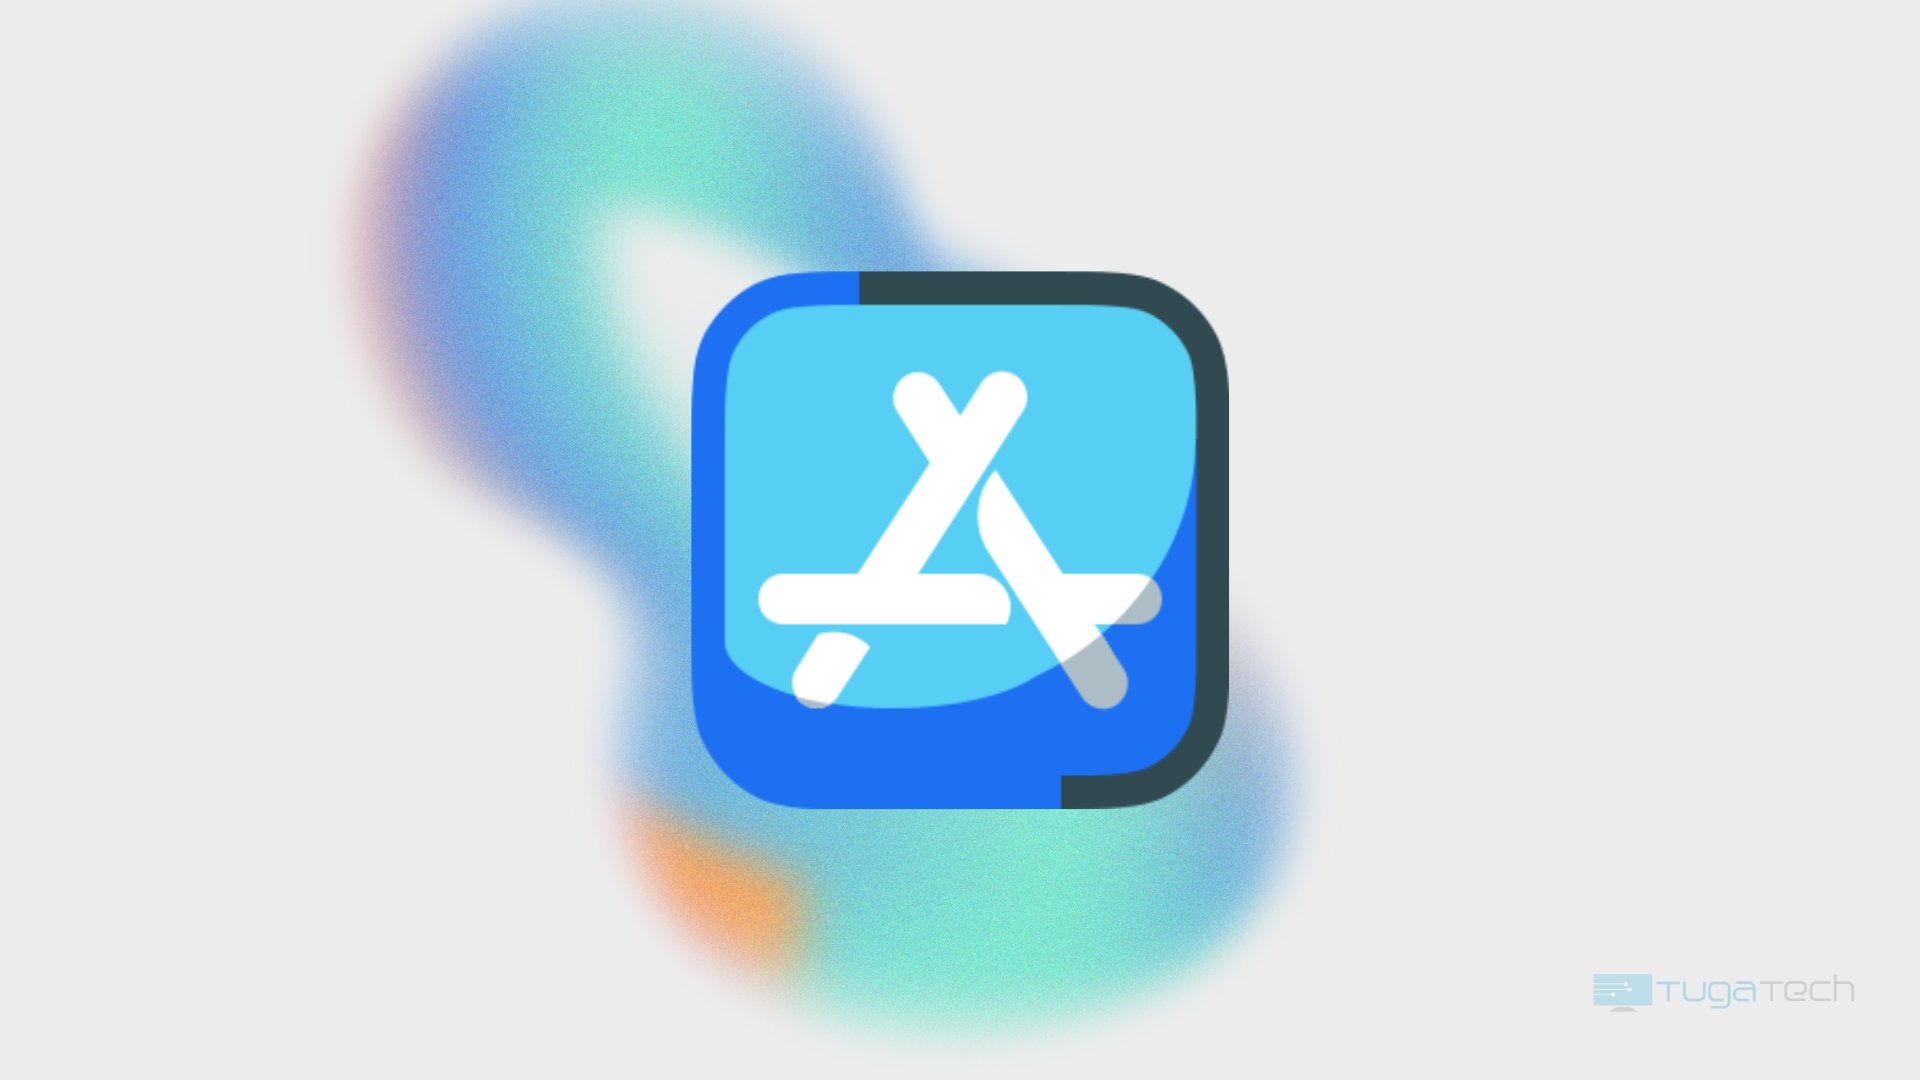 Apple iOS App Store